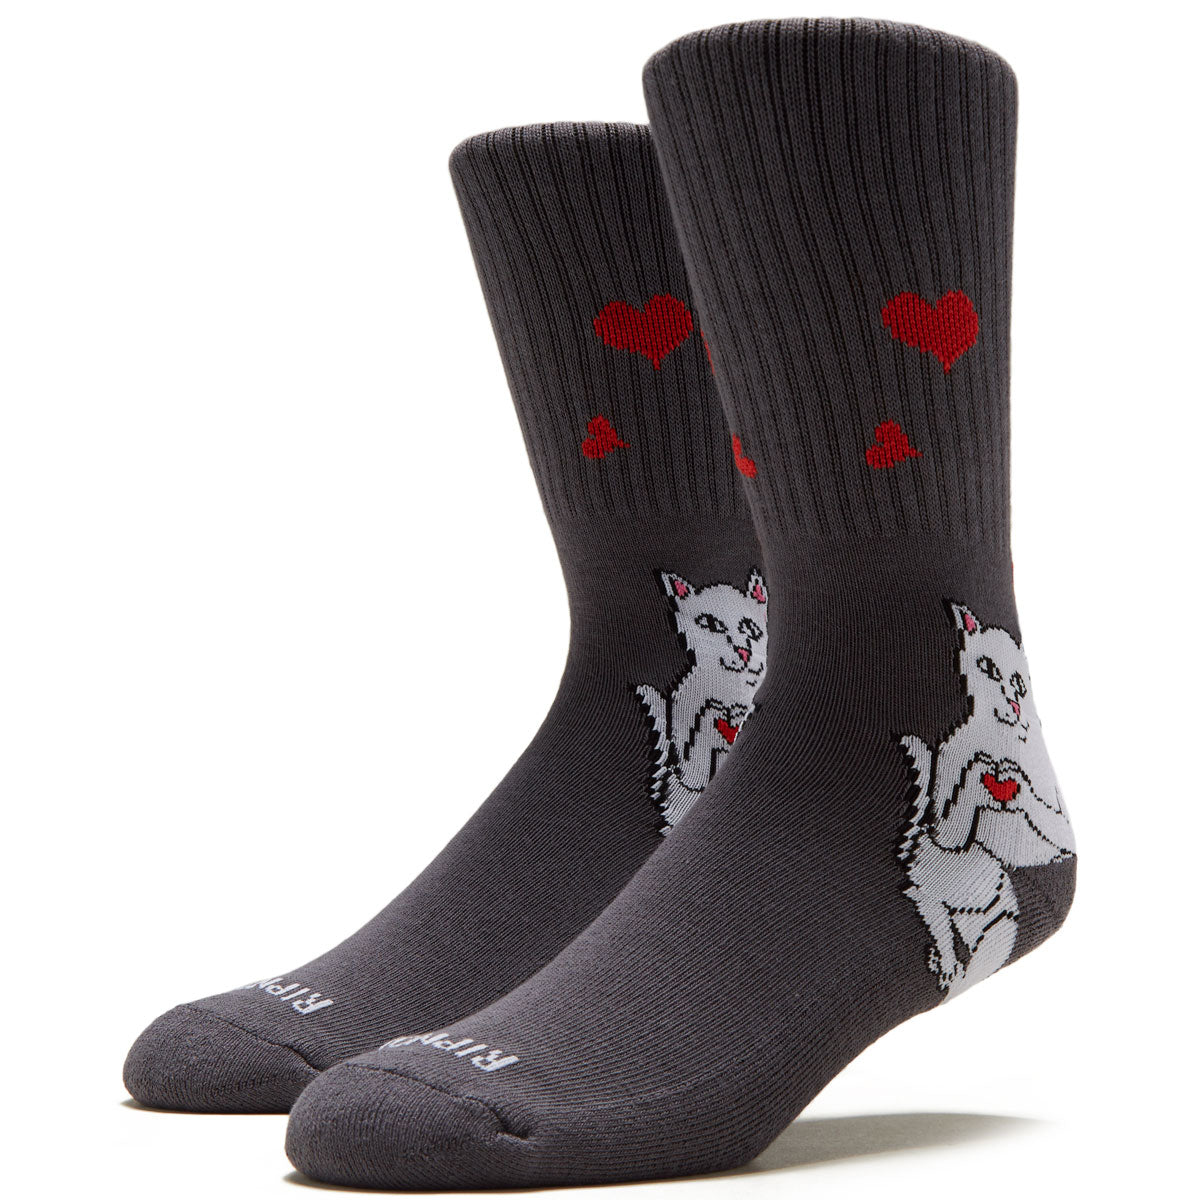 RIPNDIP Nerm Love Socks - Charcoal image 1